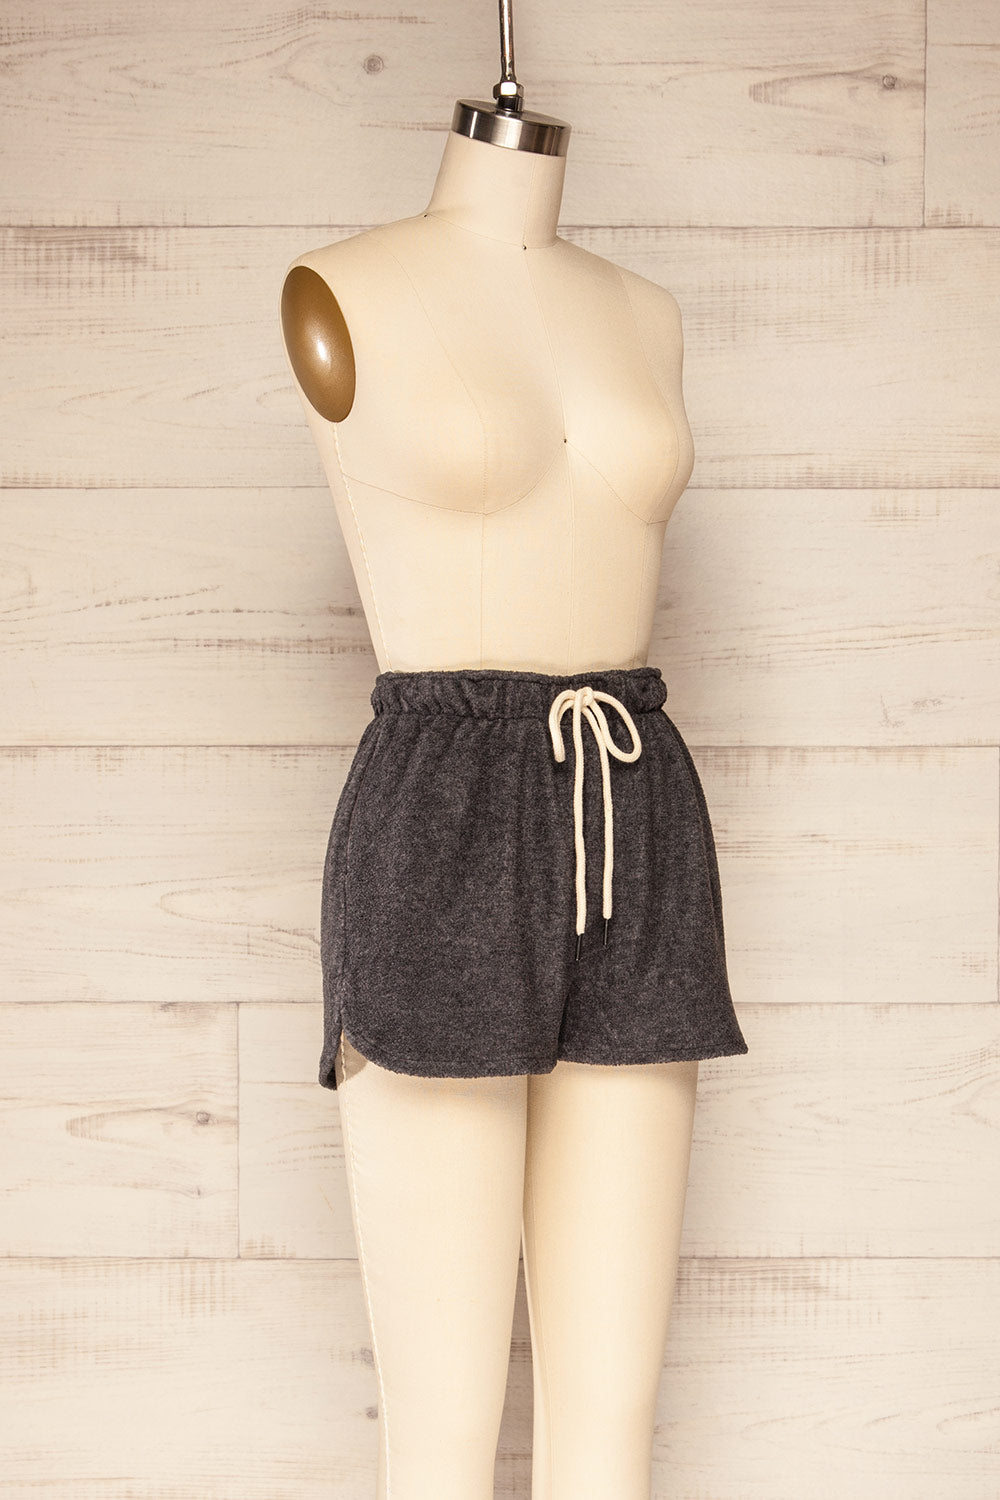 Set Jesen Charcoal Long Sleeve Top & Shorts | La petite garçonne side view